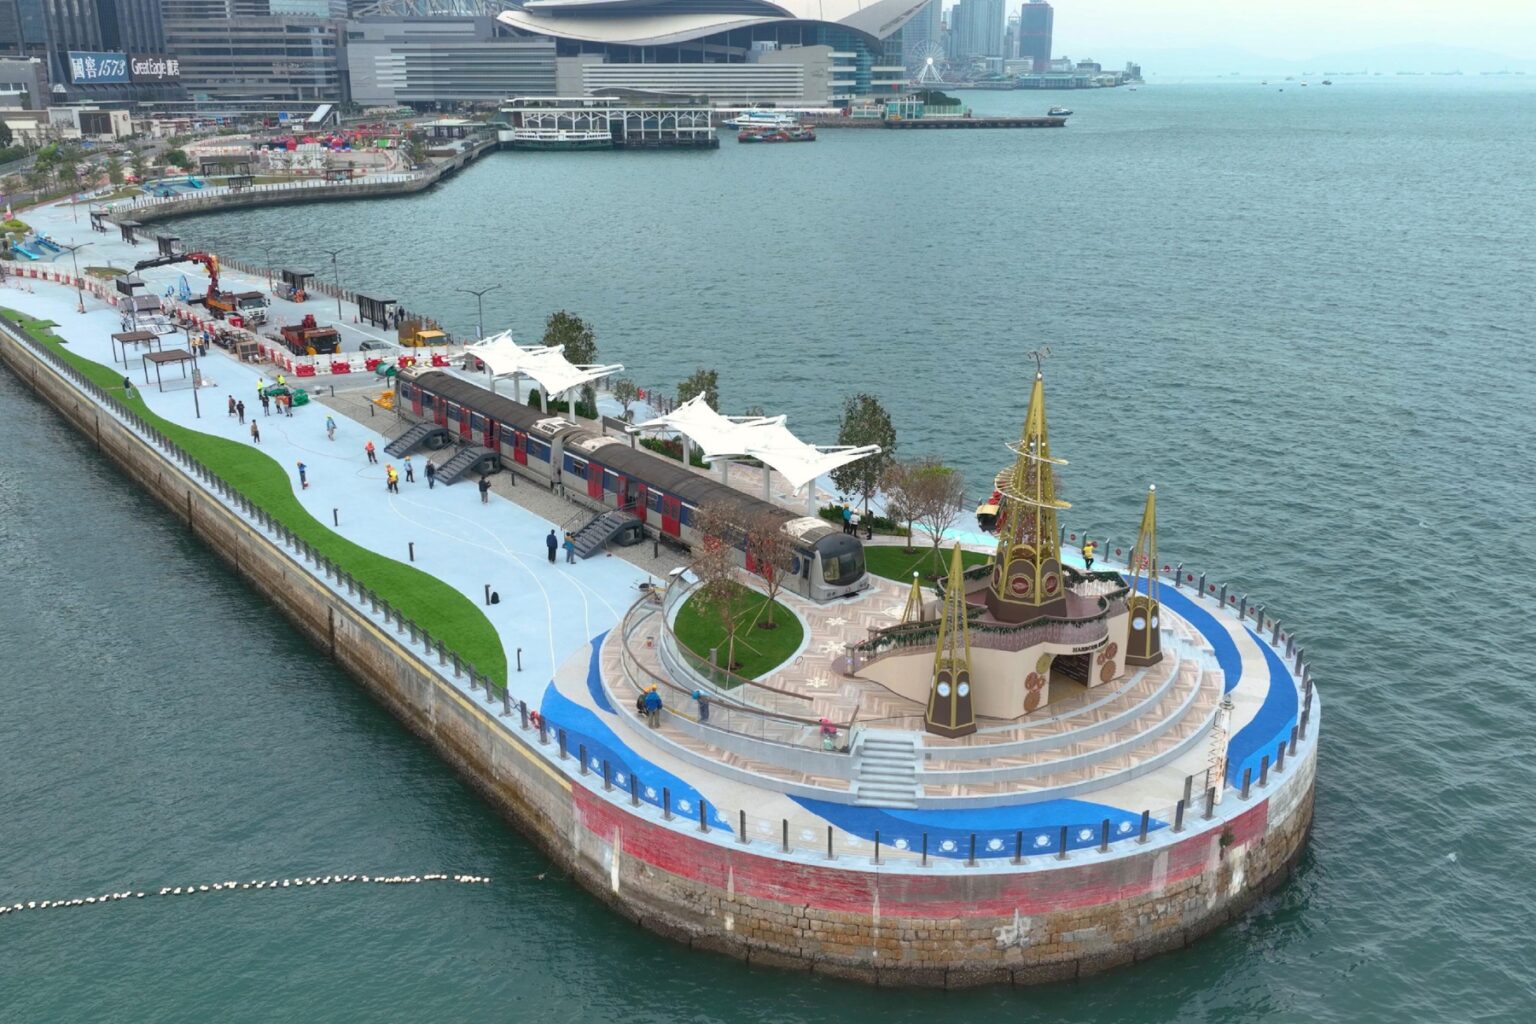 hong kong's longest promenade on victoria harbour opens on december 21